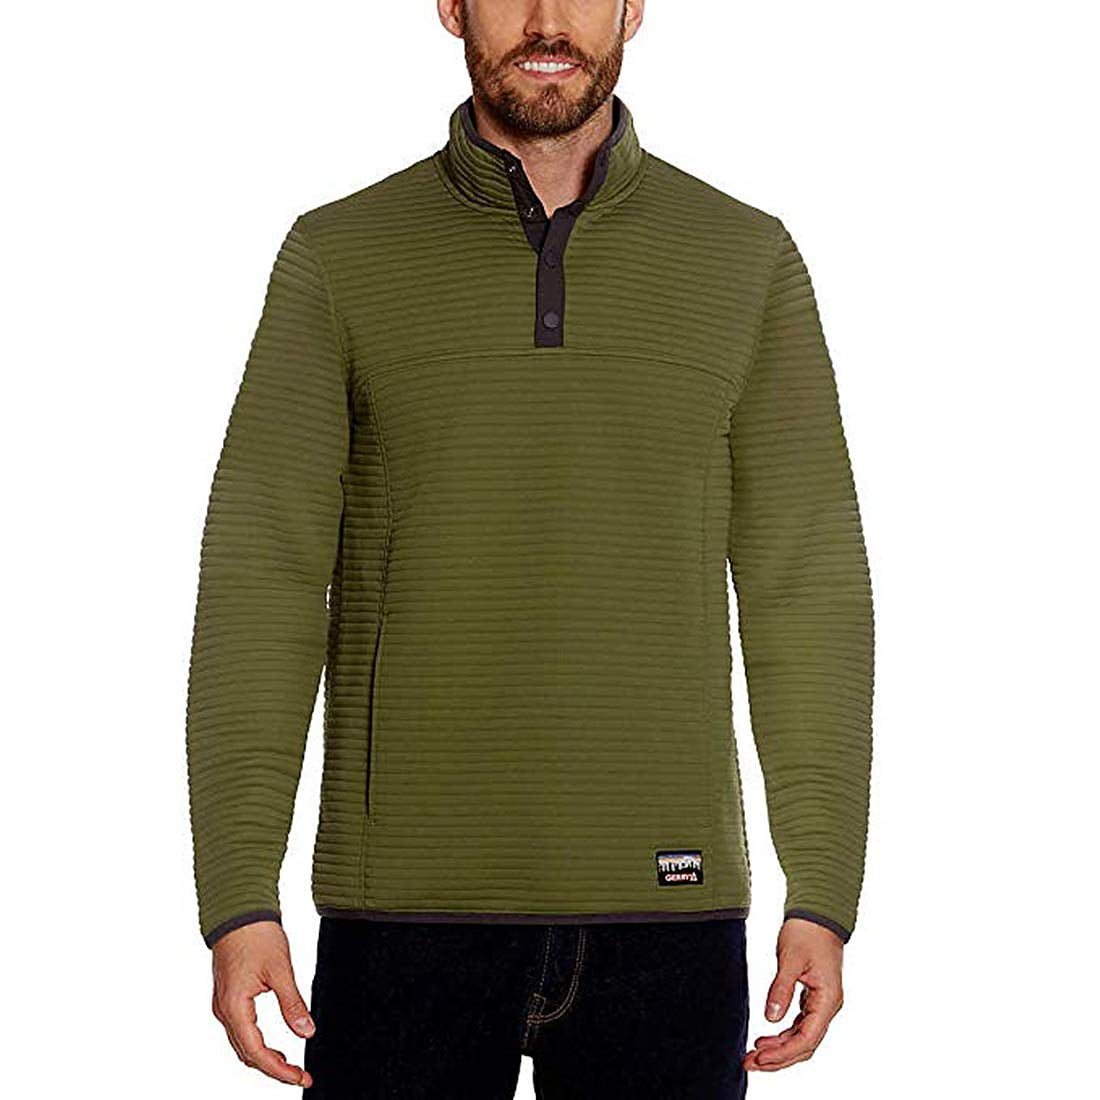 Mens-Gerry-1/4 Zip Ottoman Pullover (Medium, Olive) - Walmart.com